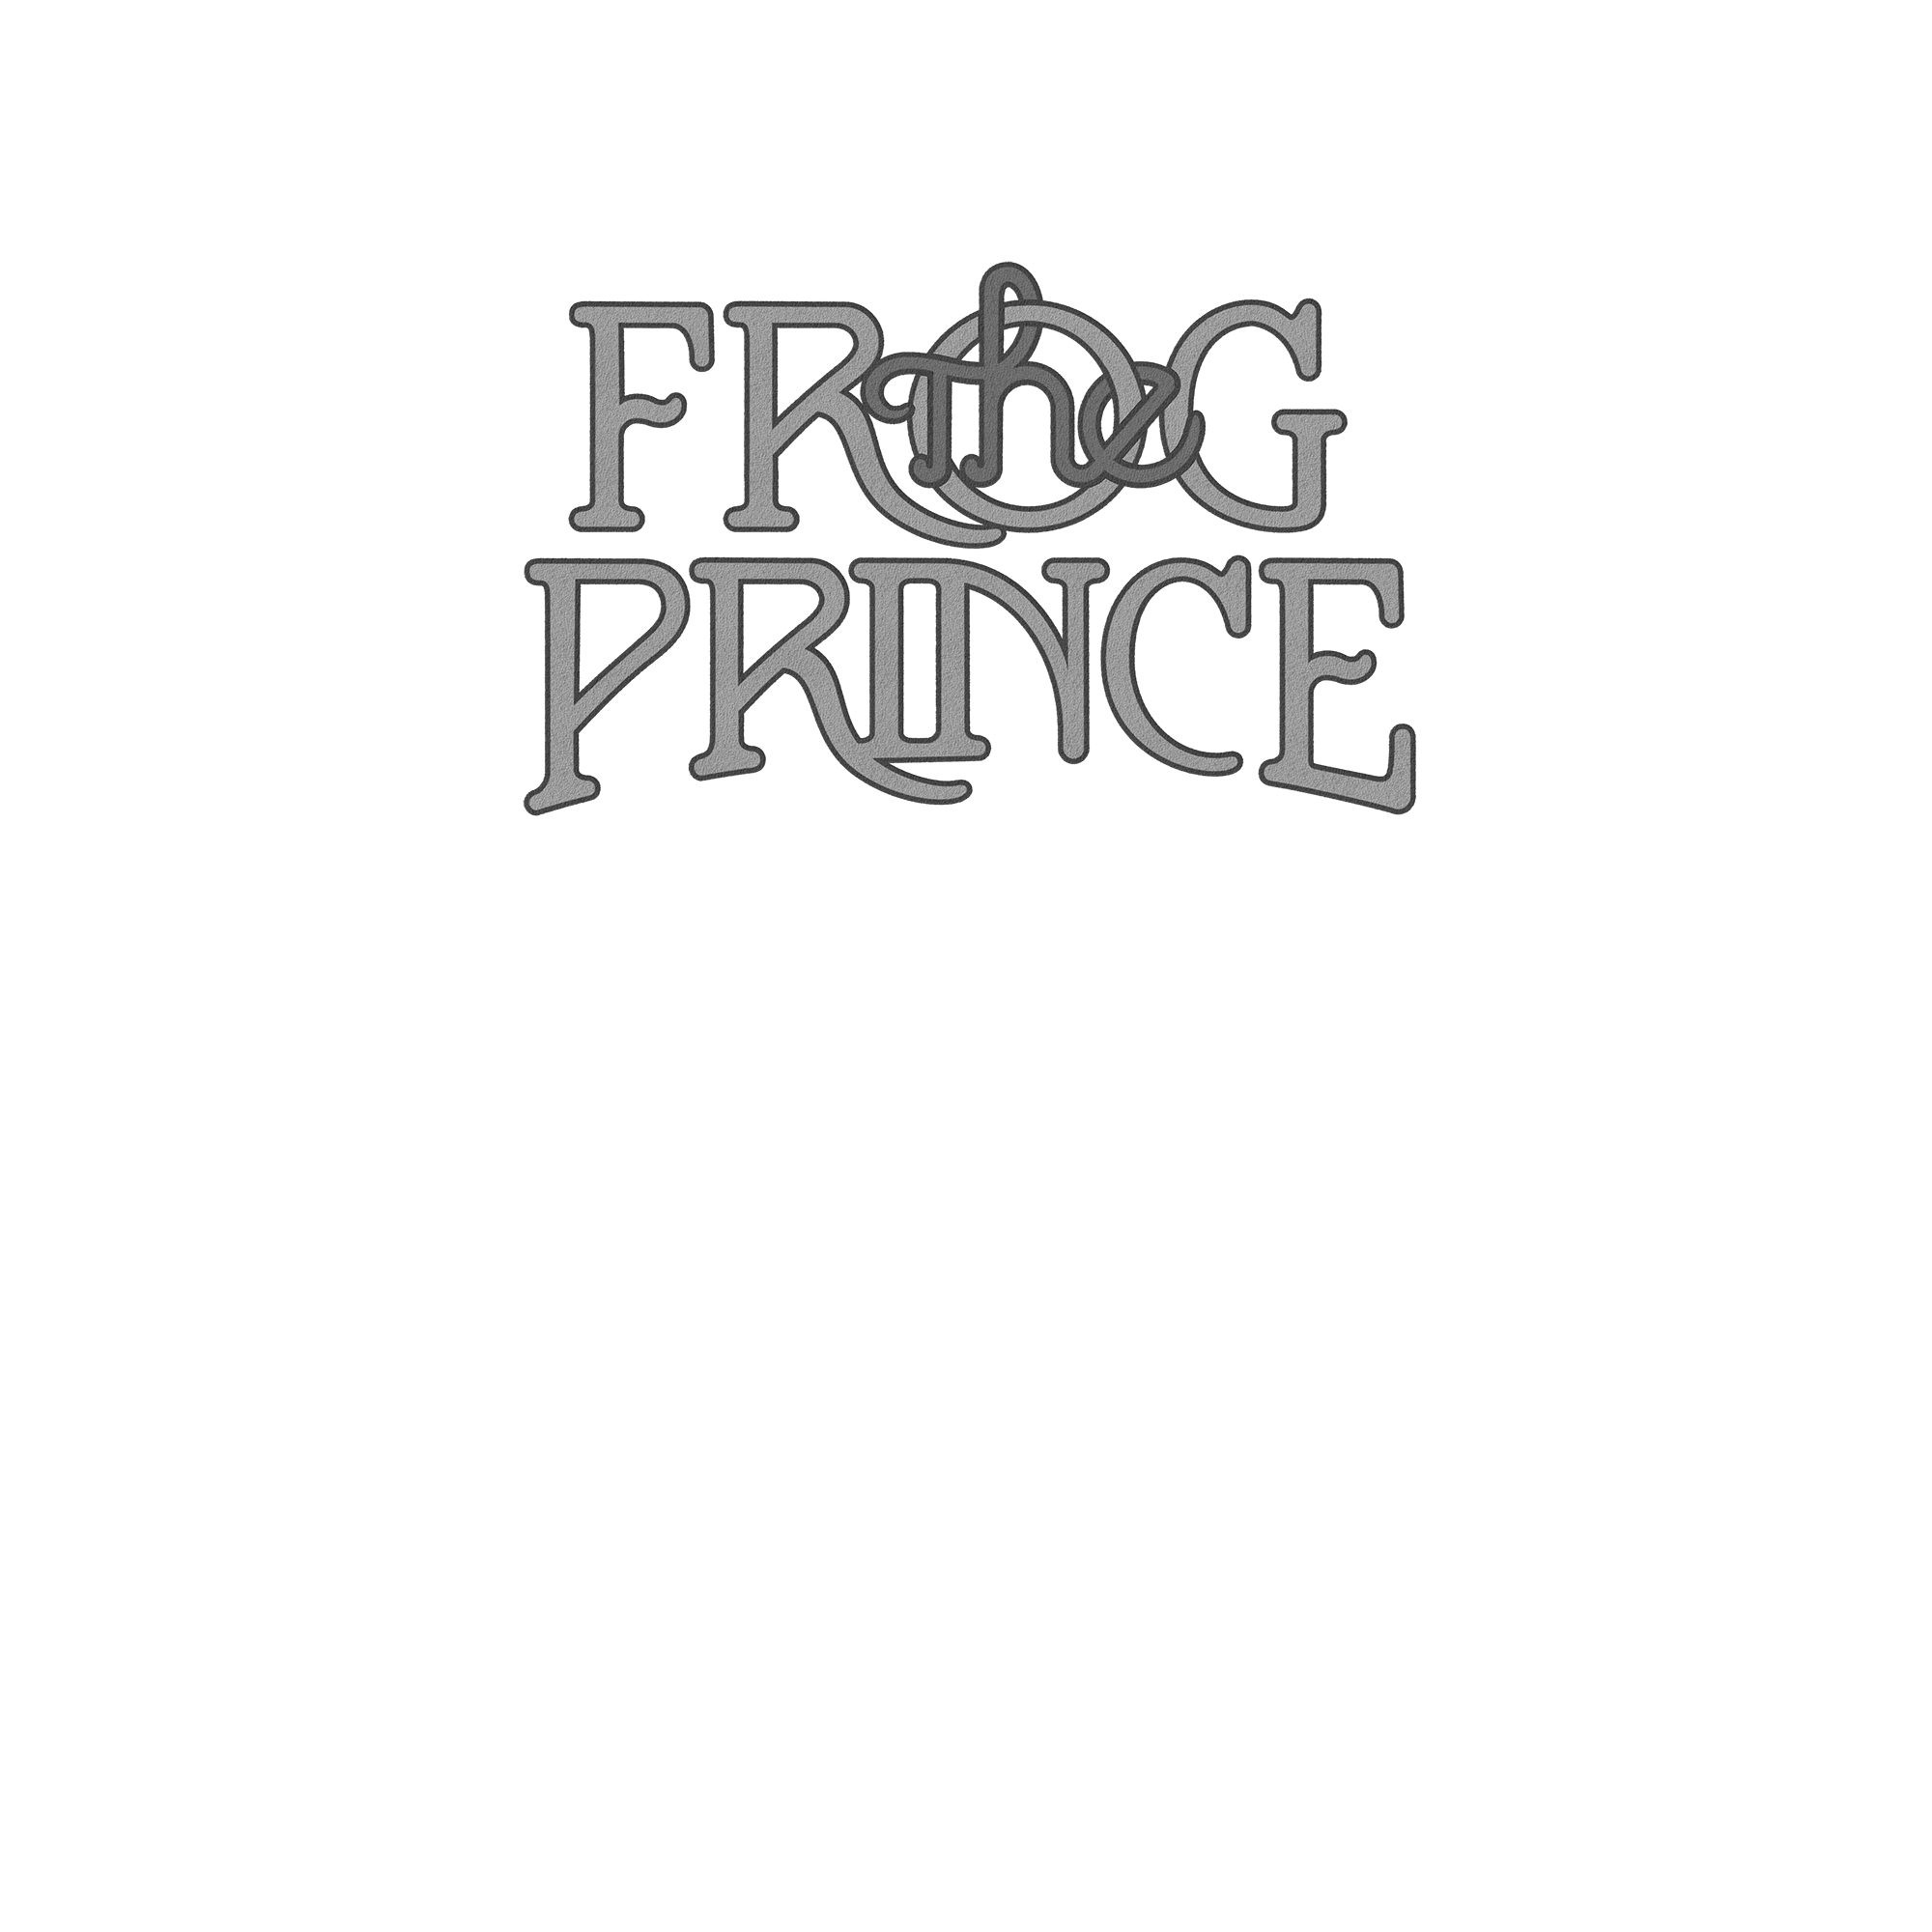 Frogprince Illustration, layer2